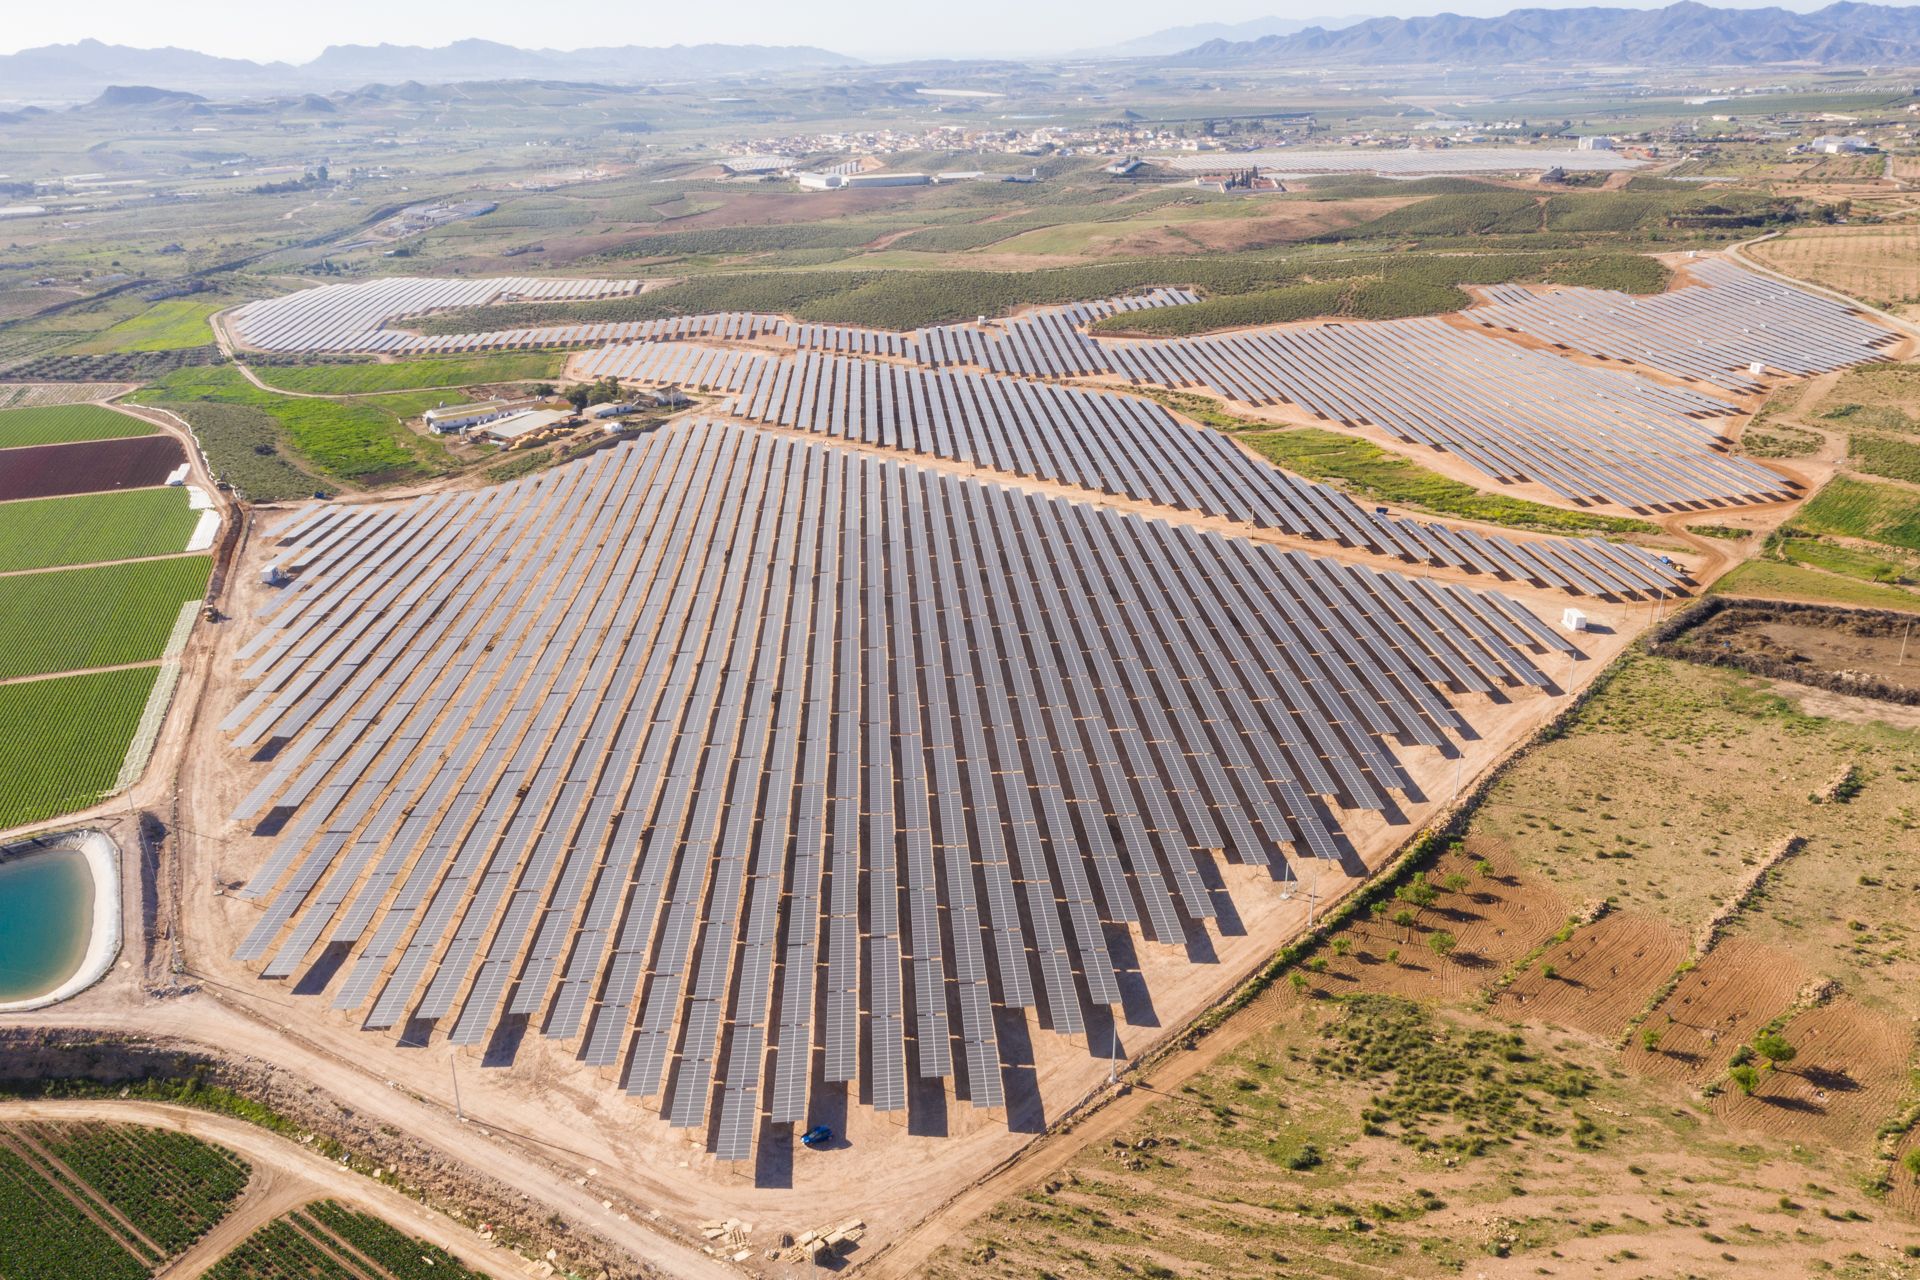 X Elio Sells Its Portfolio Of 13 Solar Pv Plants In Spain Totalling 500 Mw To China Three Gorges Europe